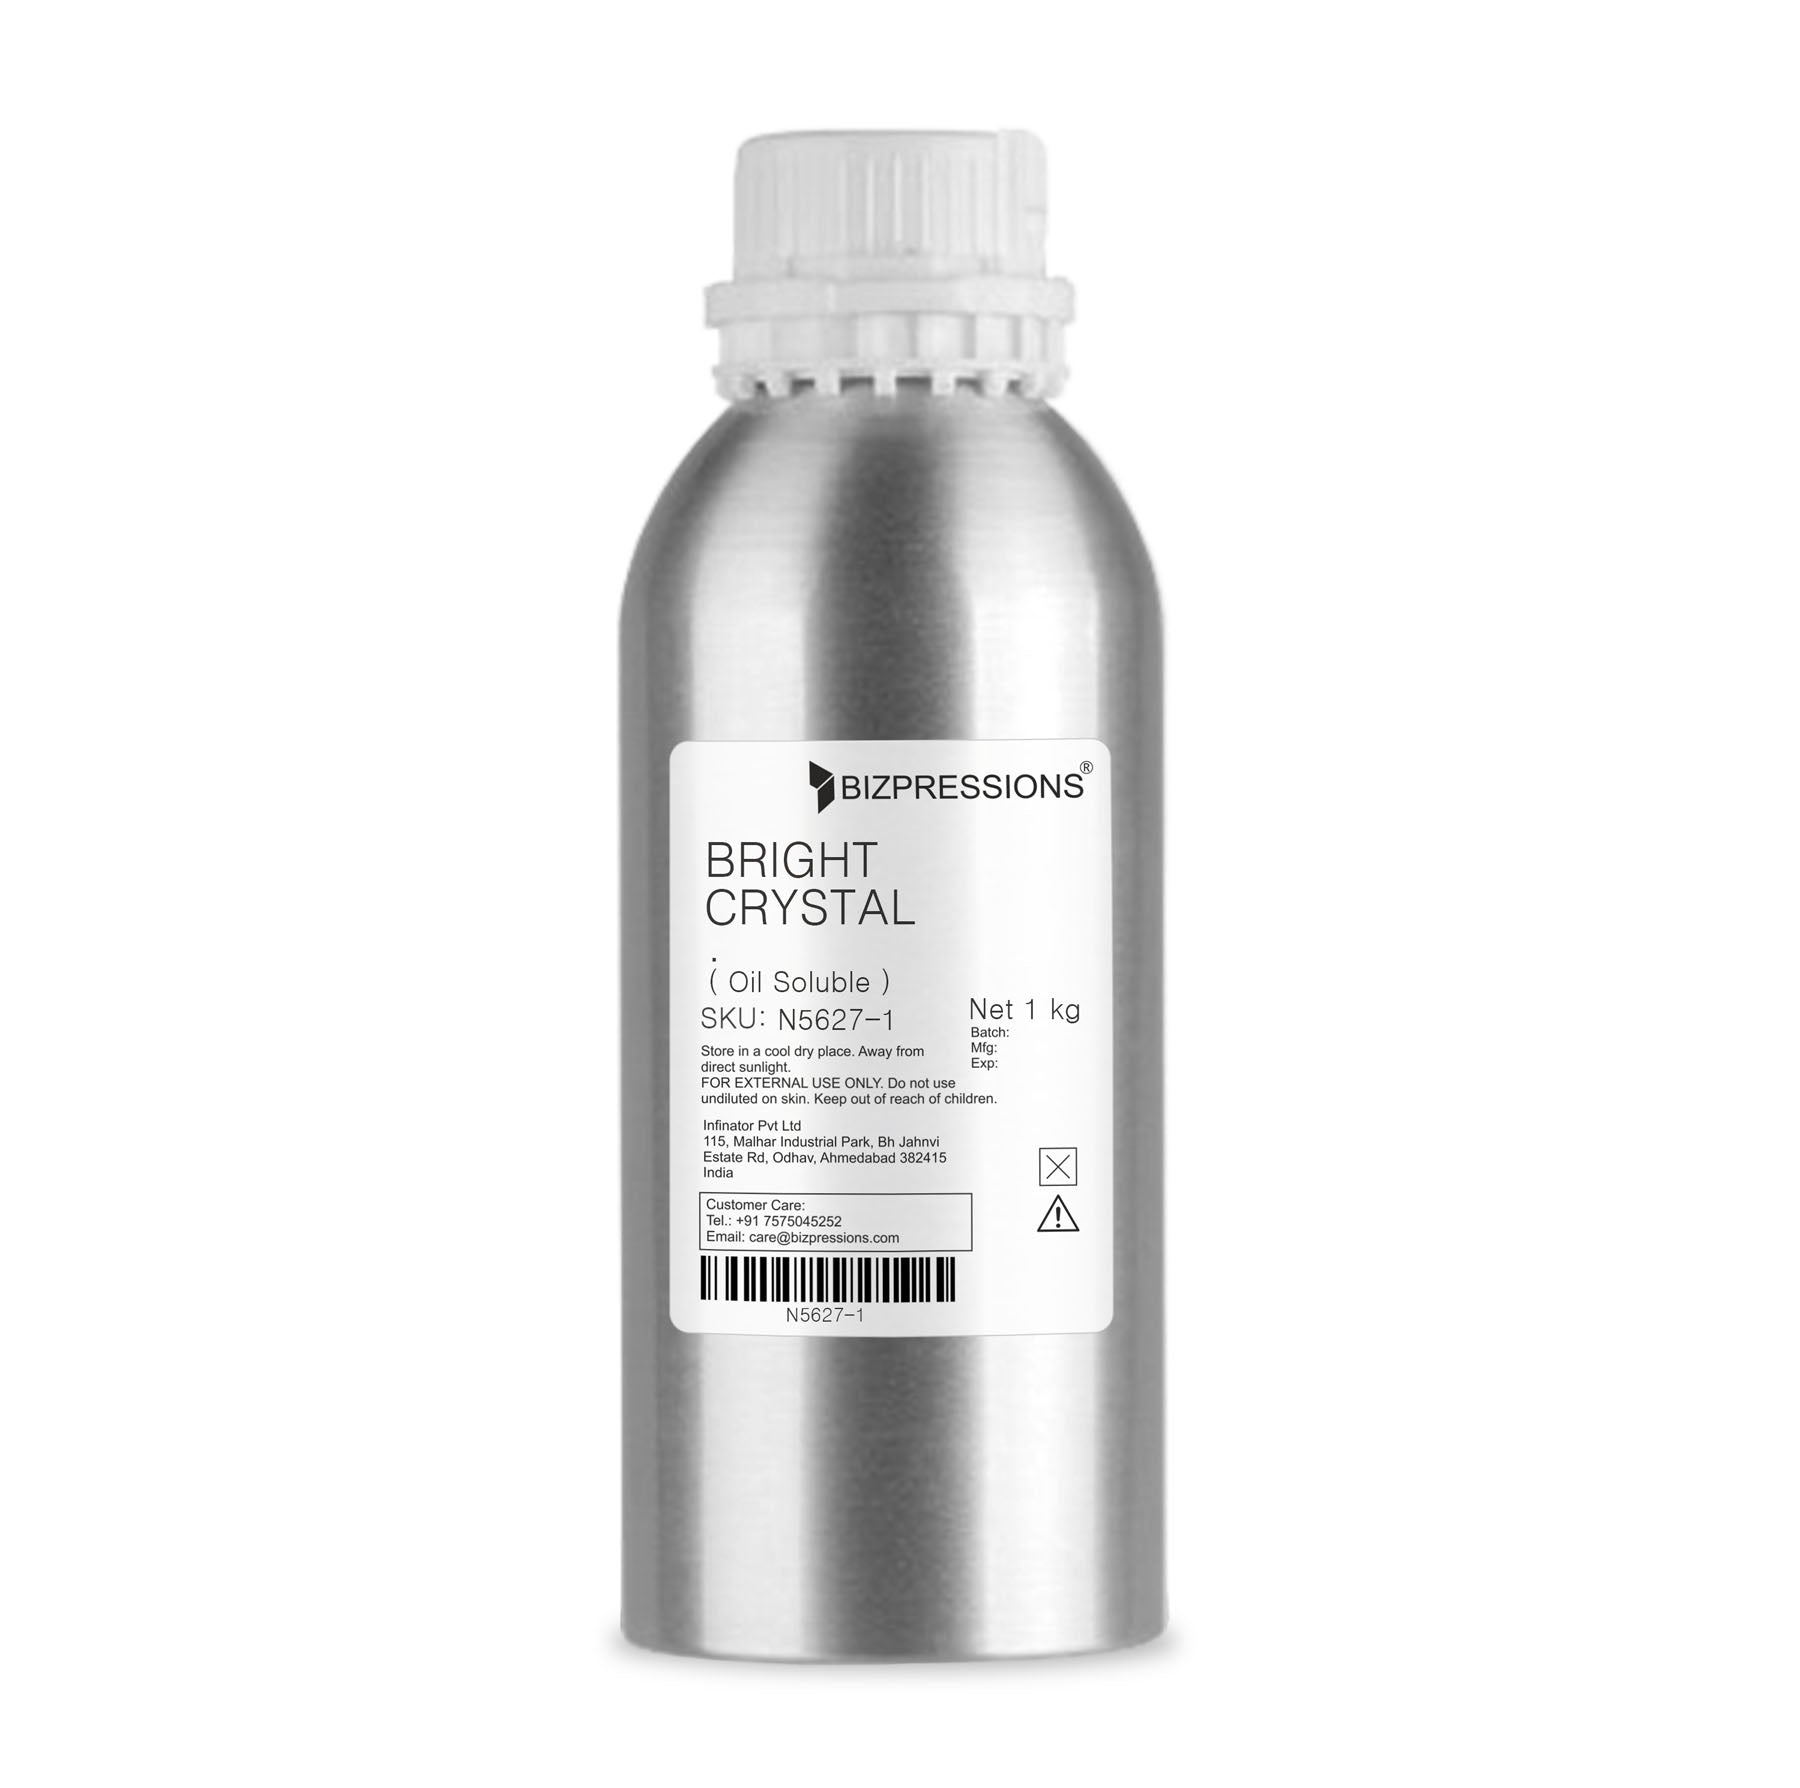 BRIGHT CRYSTAL - Fragrance ( Oil Soluble ) - 1 kg